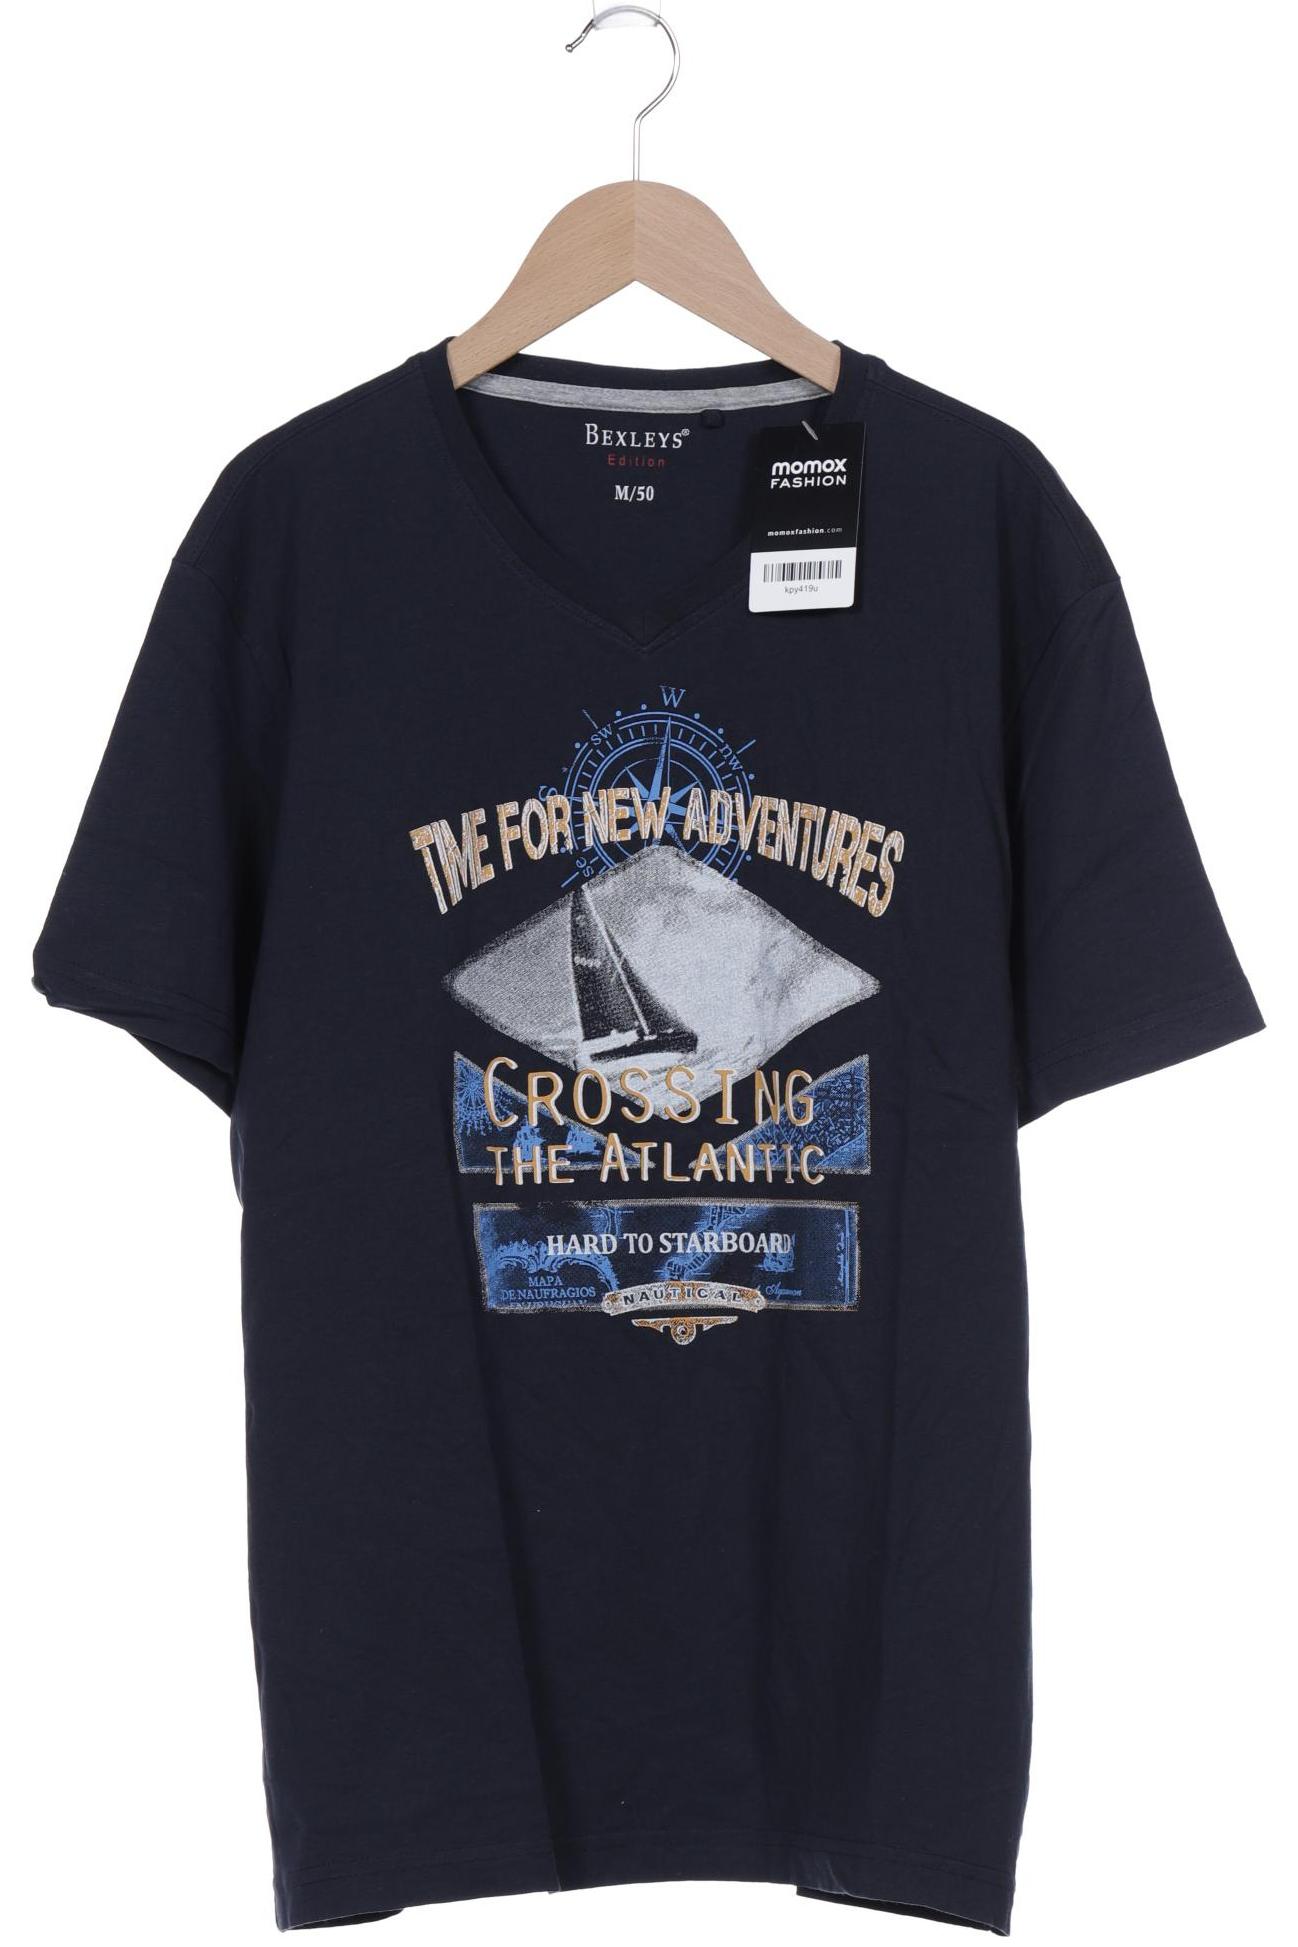 Bexleys Herren T-Shirt, marineblau, Gr. 50 von Bexleys